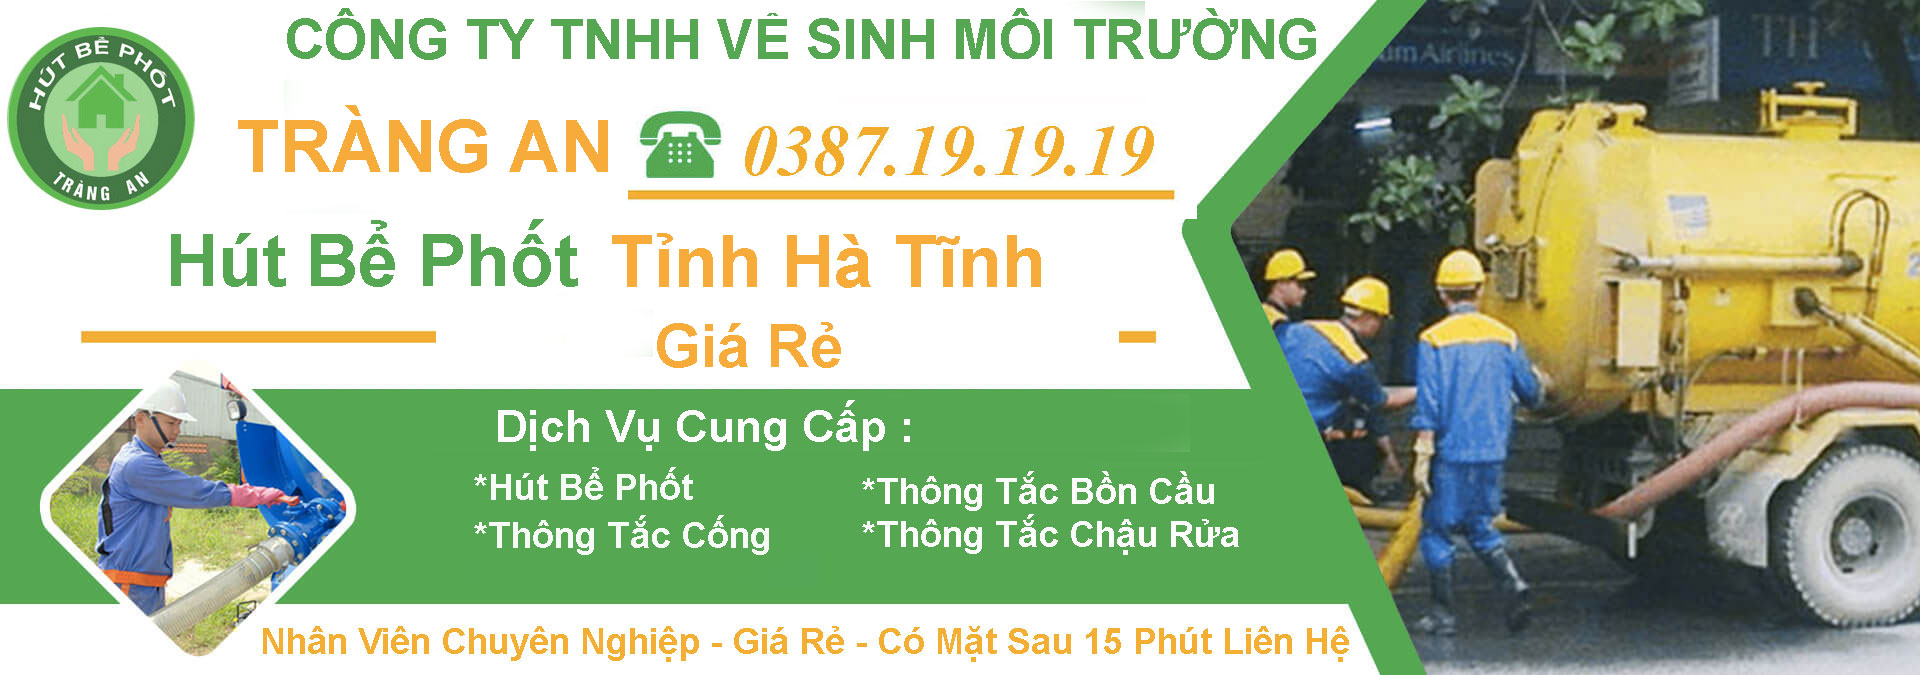 Hut Be Phot Ha Tinh